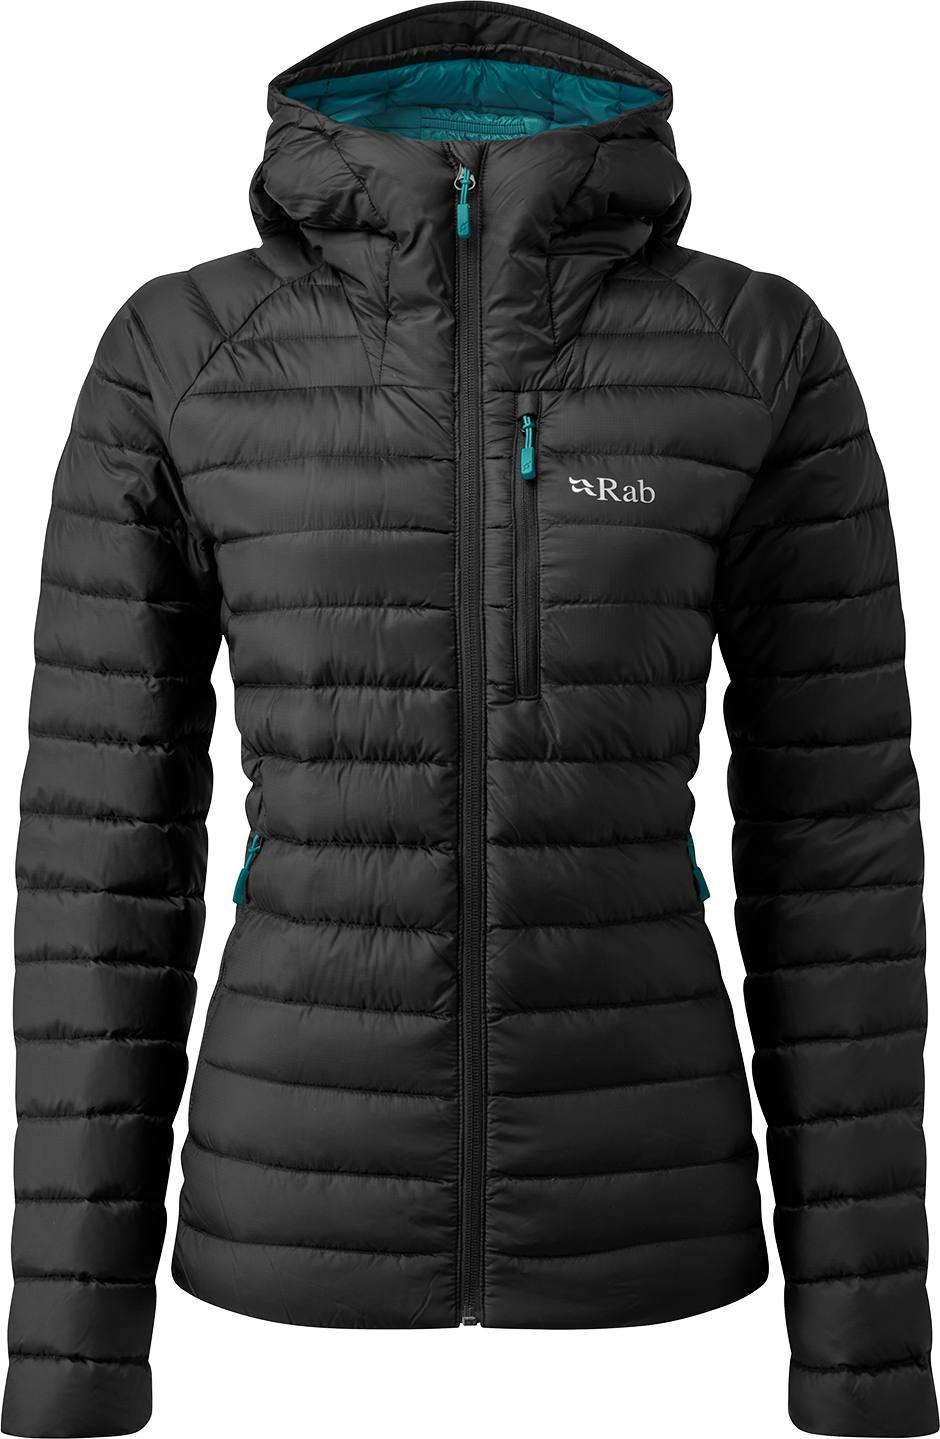 Rab Microlight Alpine Women’s Jacket